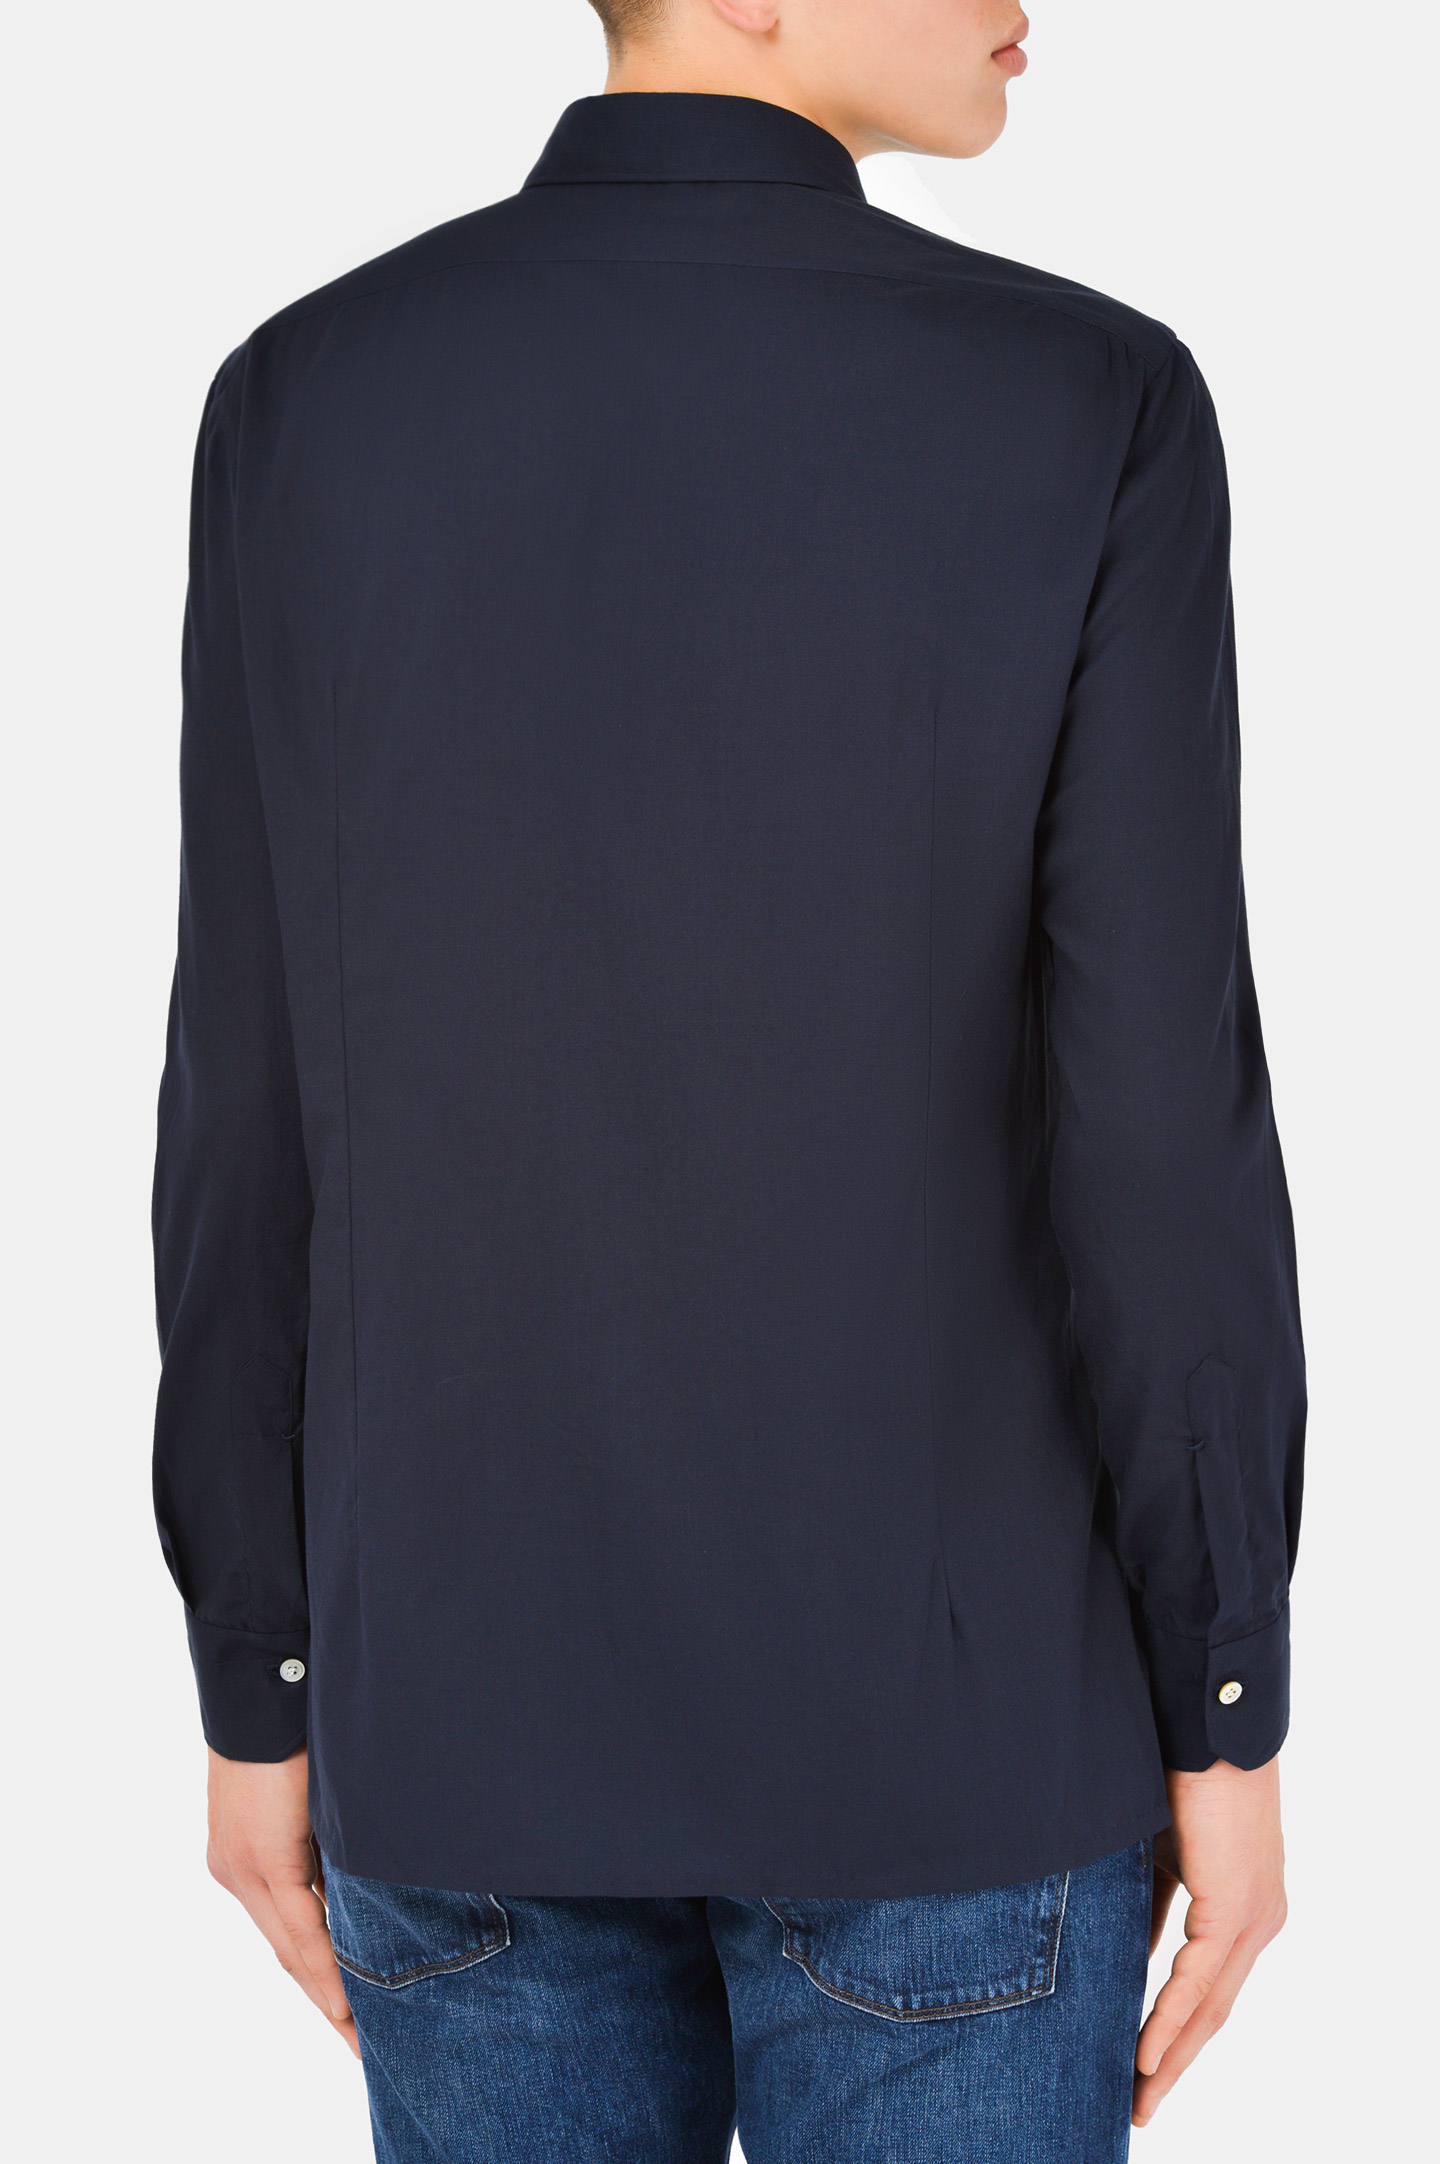 Рубашка (Сорочка) KITON UMCNERH074110, цвет: Синий, Мужской